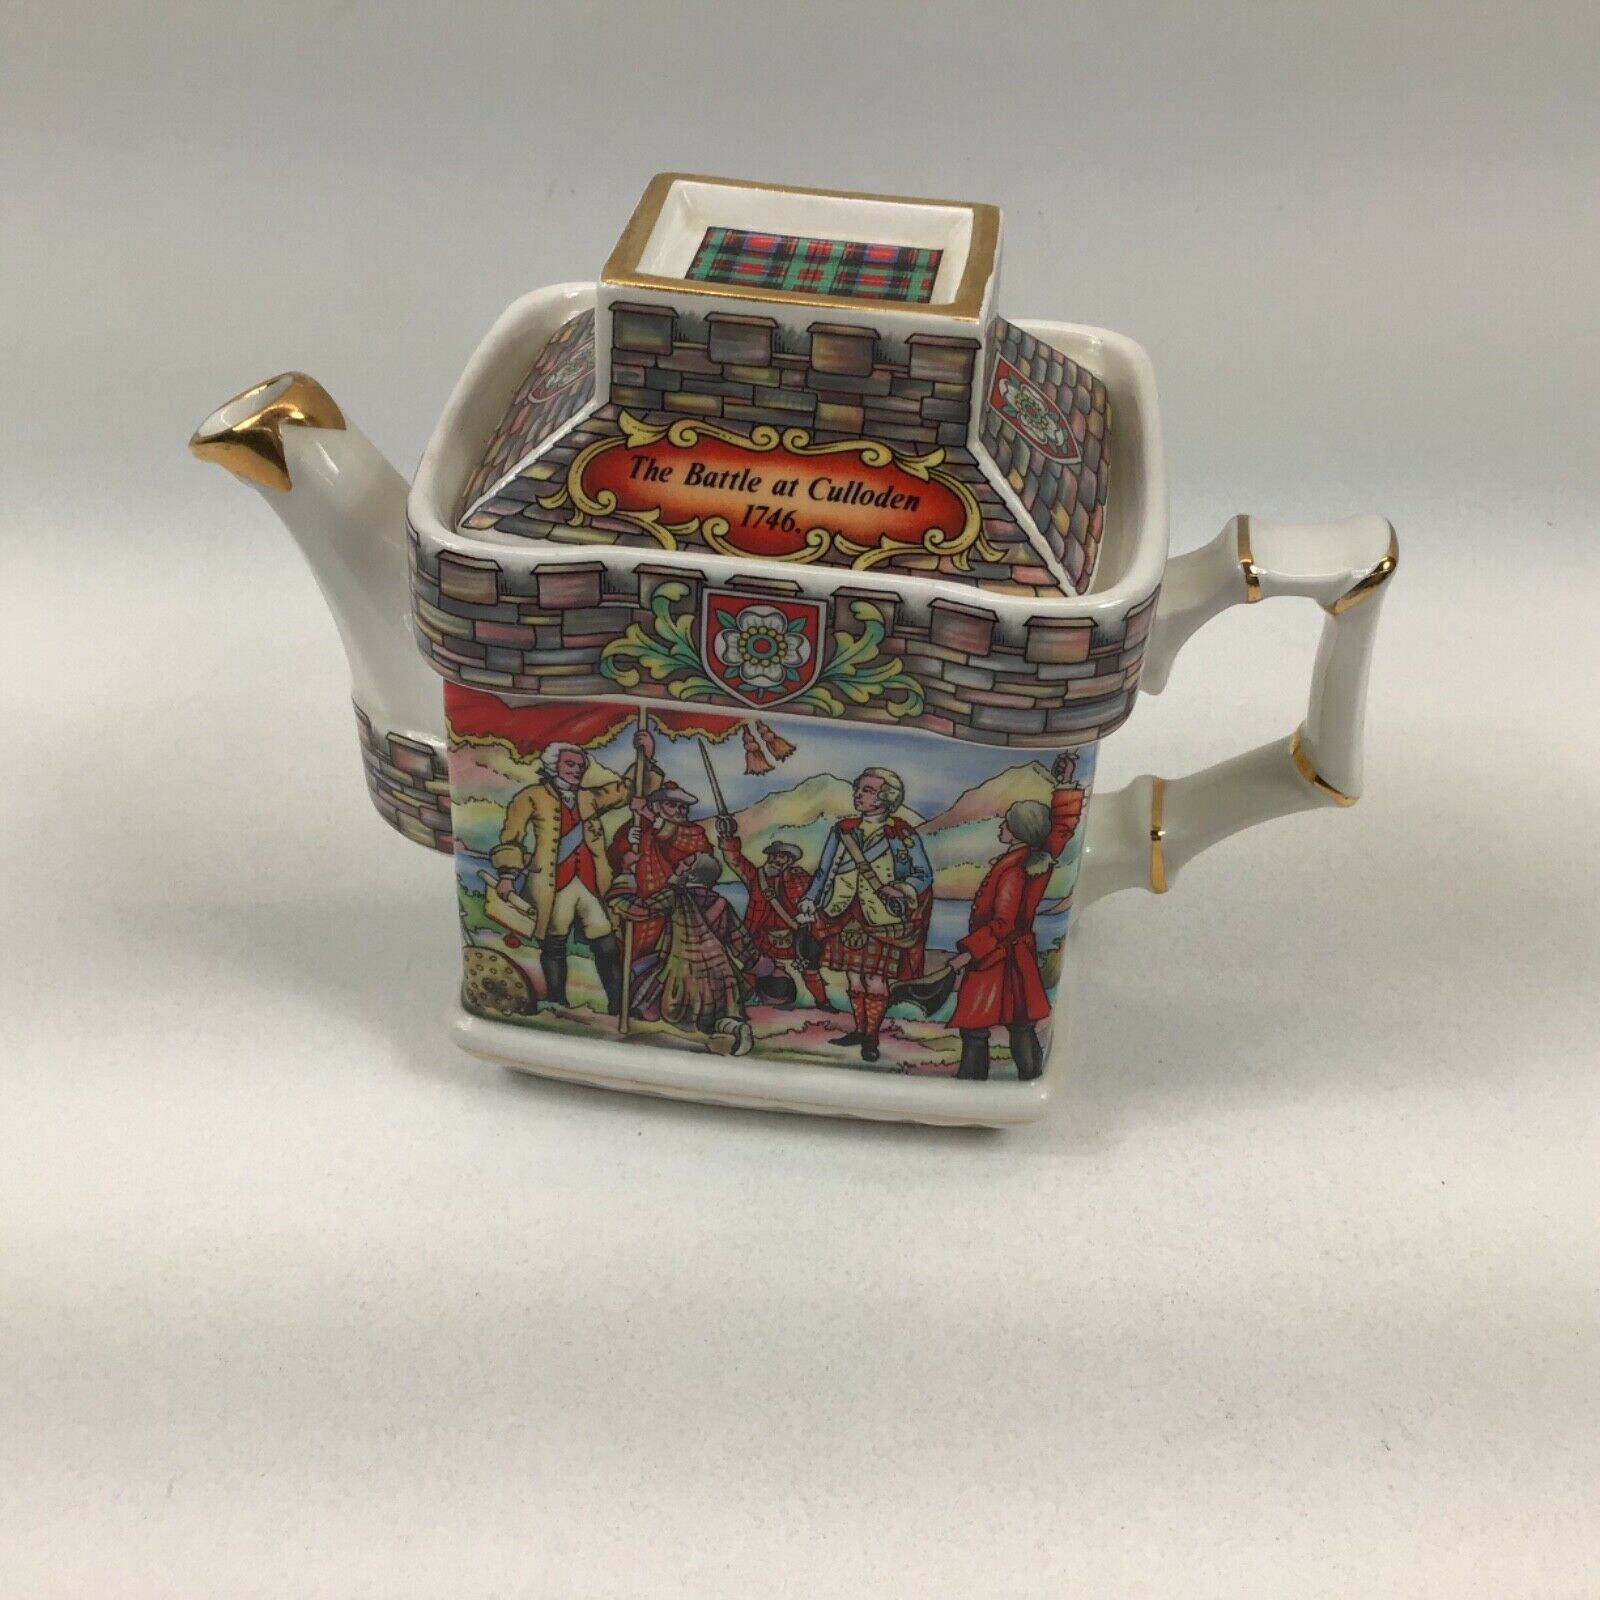 Sadler England teapot Charlie battle of culloden 1746 gold trim Bonnie prince